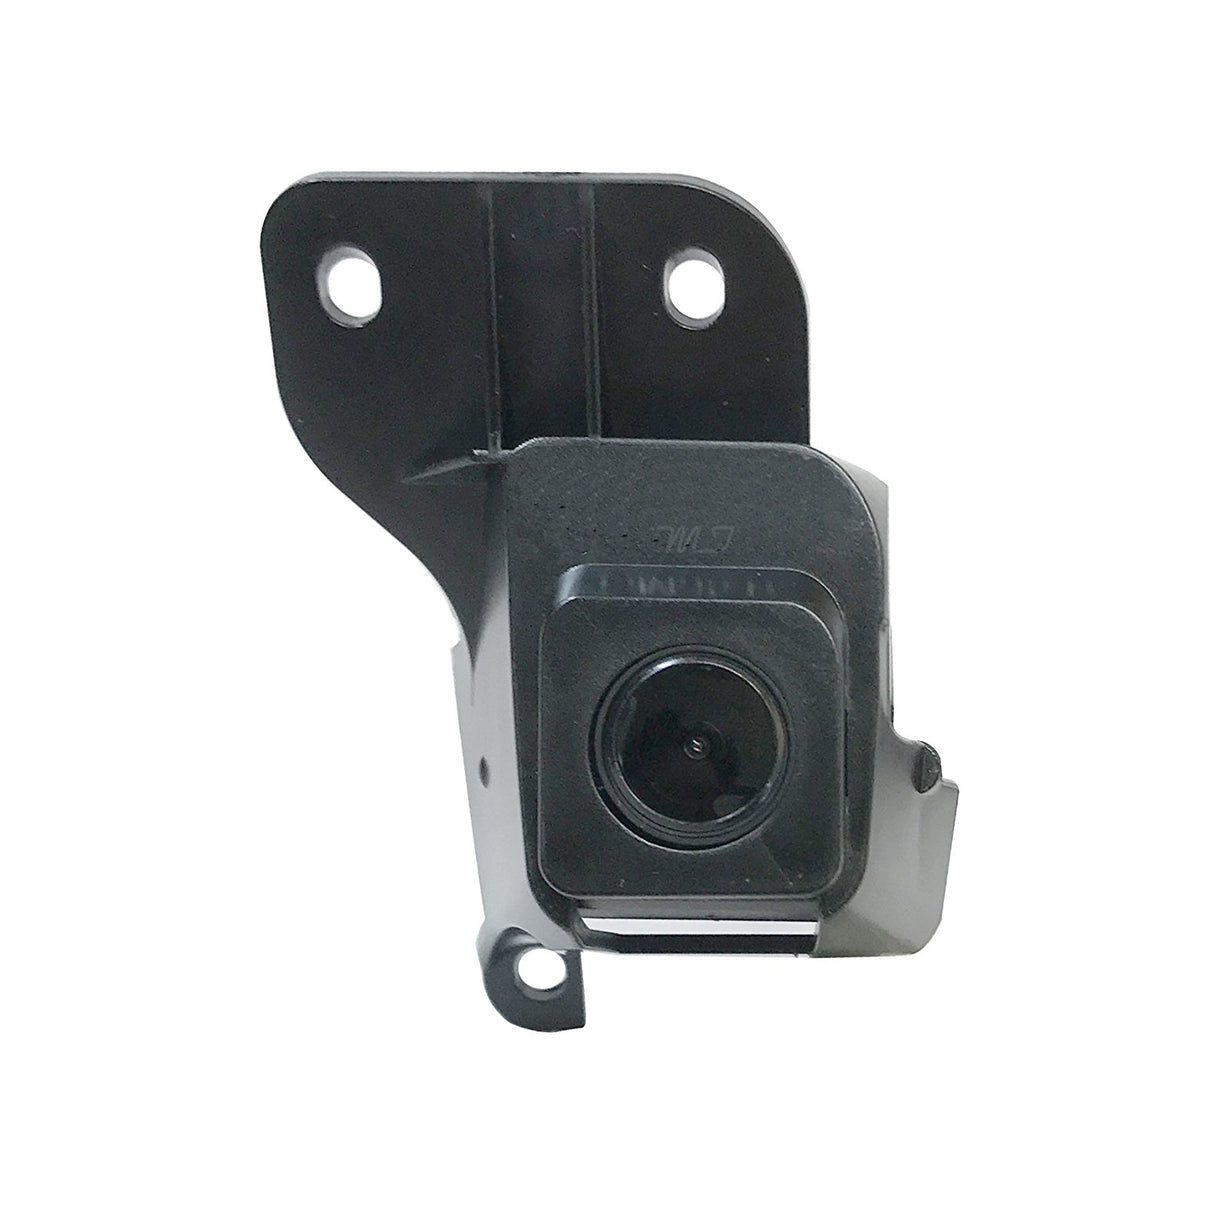 Chevrolet Silverado / GMC Sierra (2009-2012) OEM Replacement Backup Camera OE Part # 25998187, 19367046